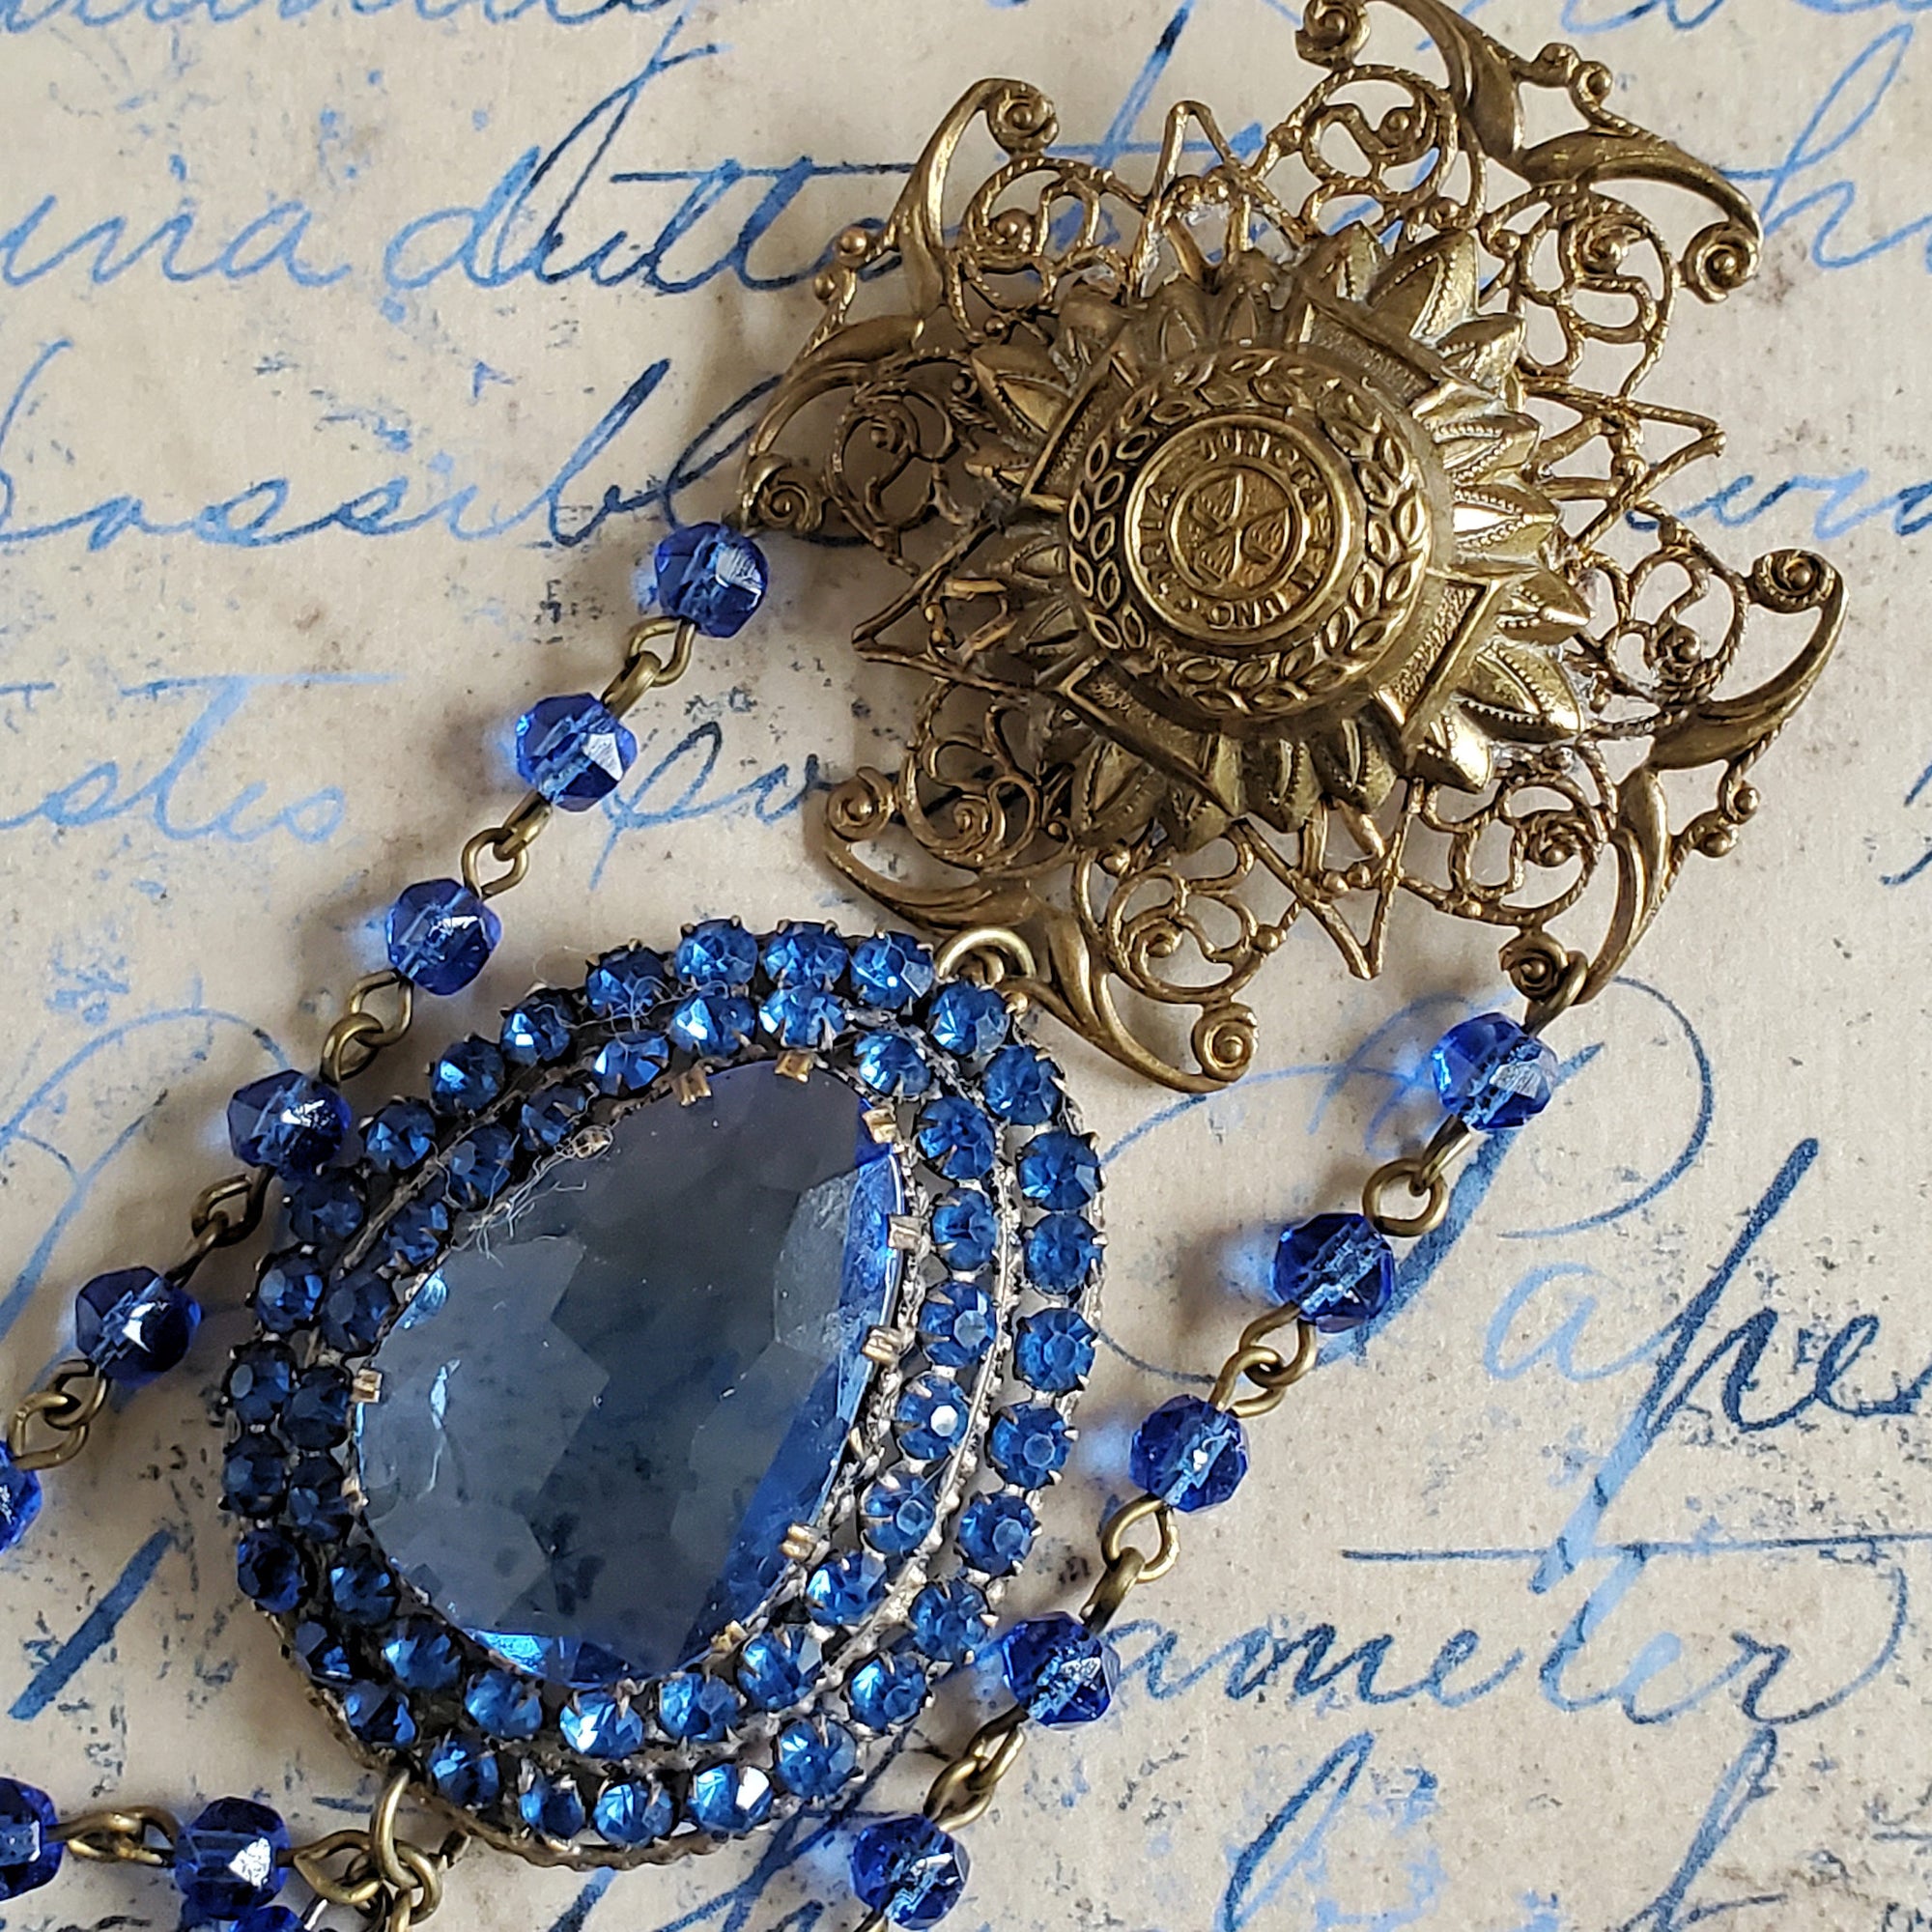 Maltese Cross Brooch with a repurposed vintage blue dress clip pendant.